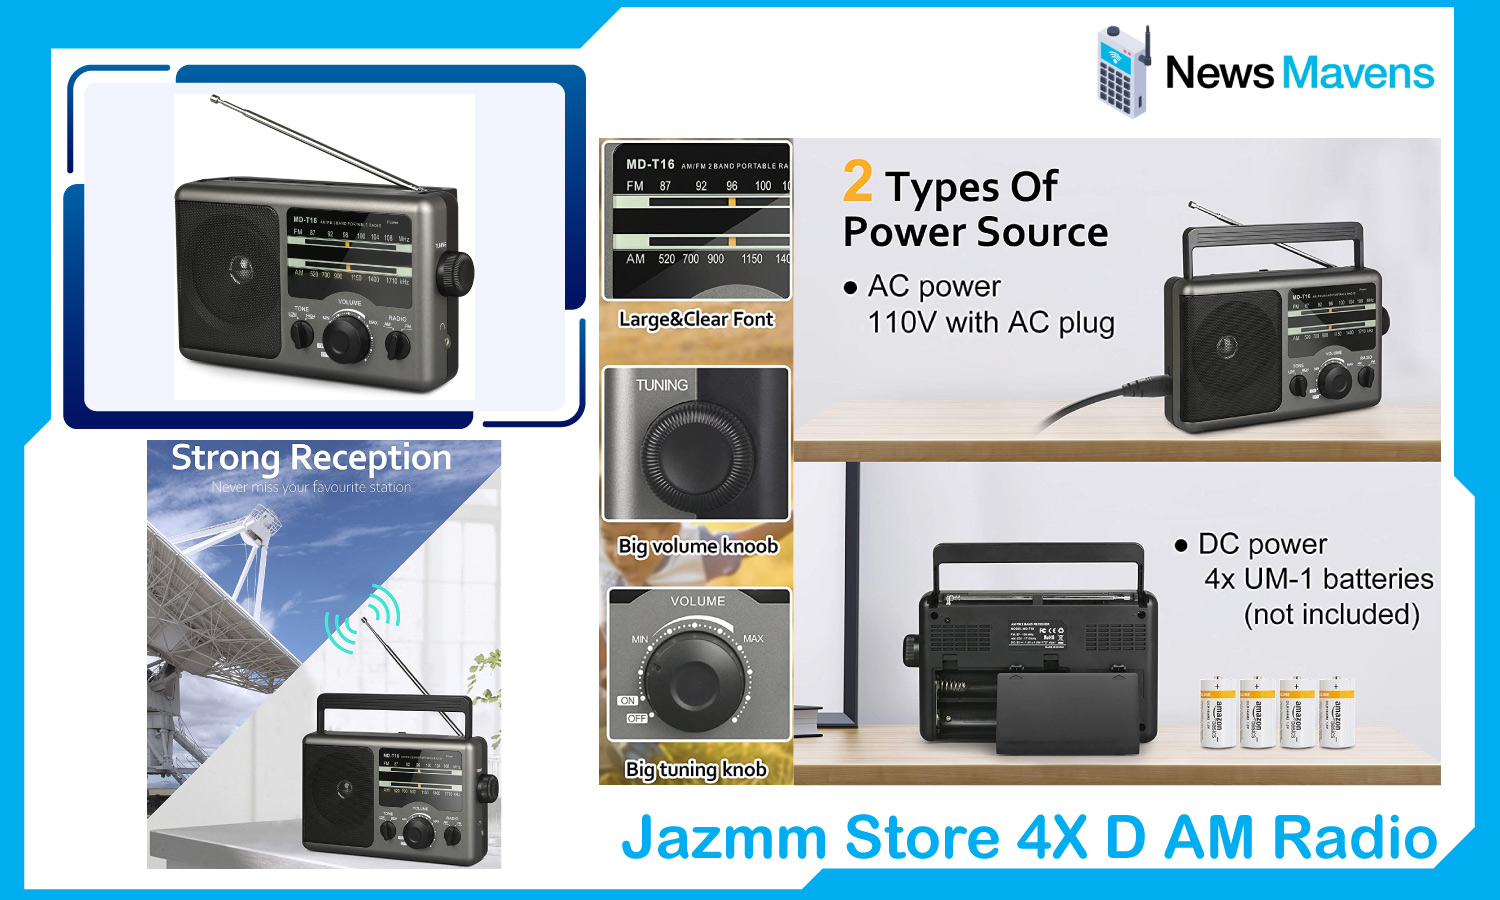 Jazmm Store's 4X D - AM Radio